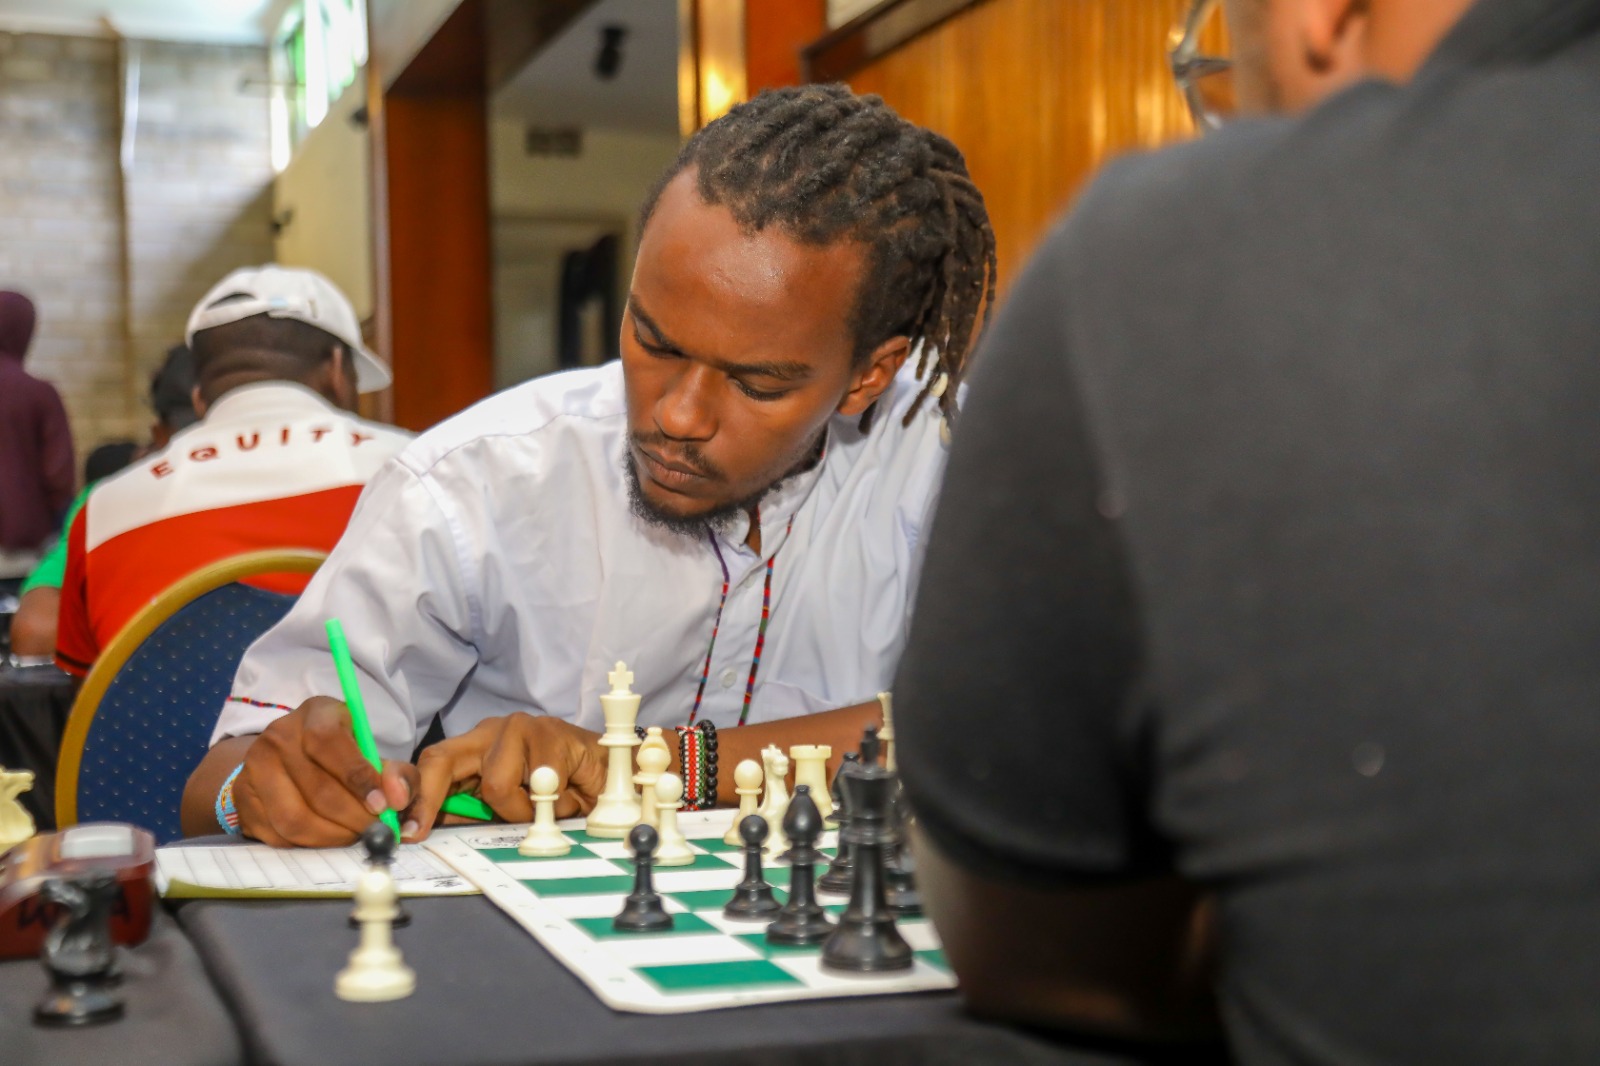 Kenya Open Chess Championship 2023